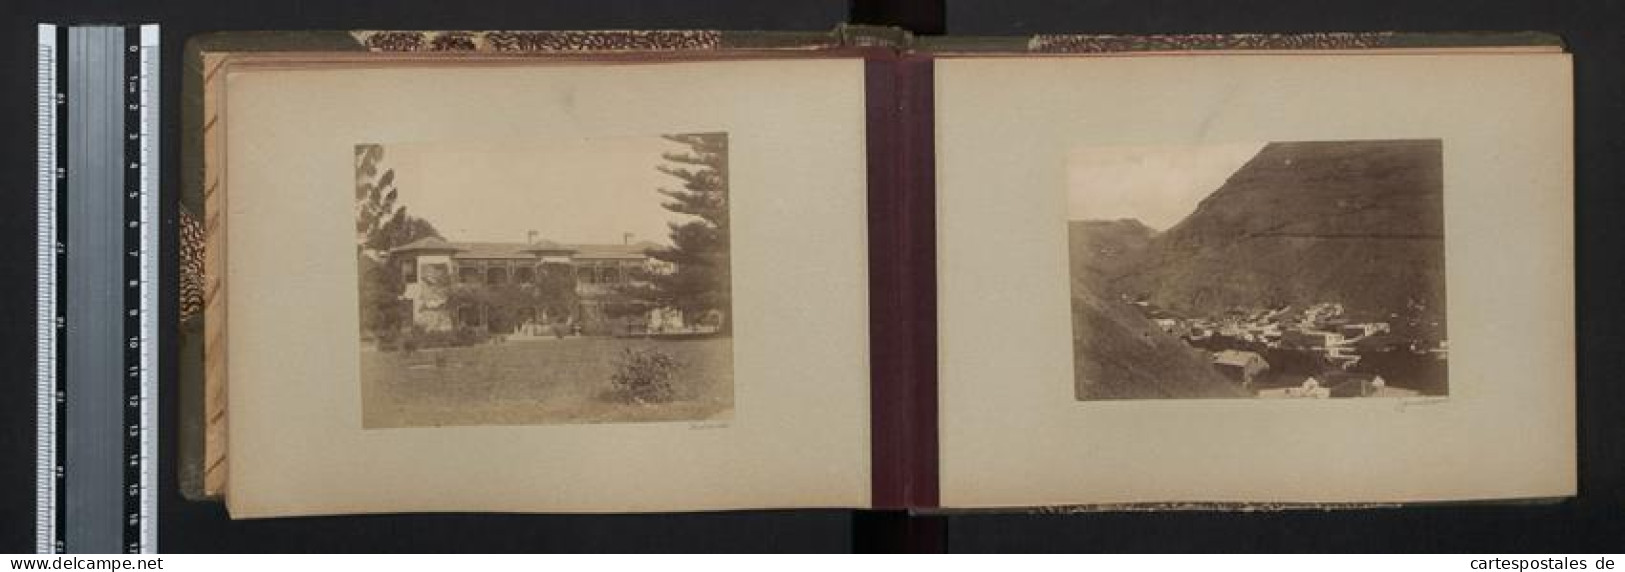 Fotoalbum mit 42 Fotografien. K.u.K. Kriegsmarine, Rundreise / Expedition Lagos, Kamerun, Dakar, Freetown, New York 